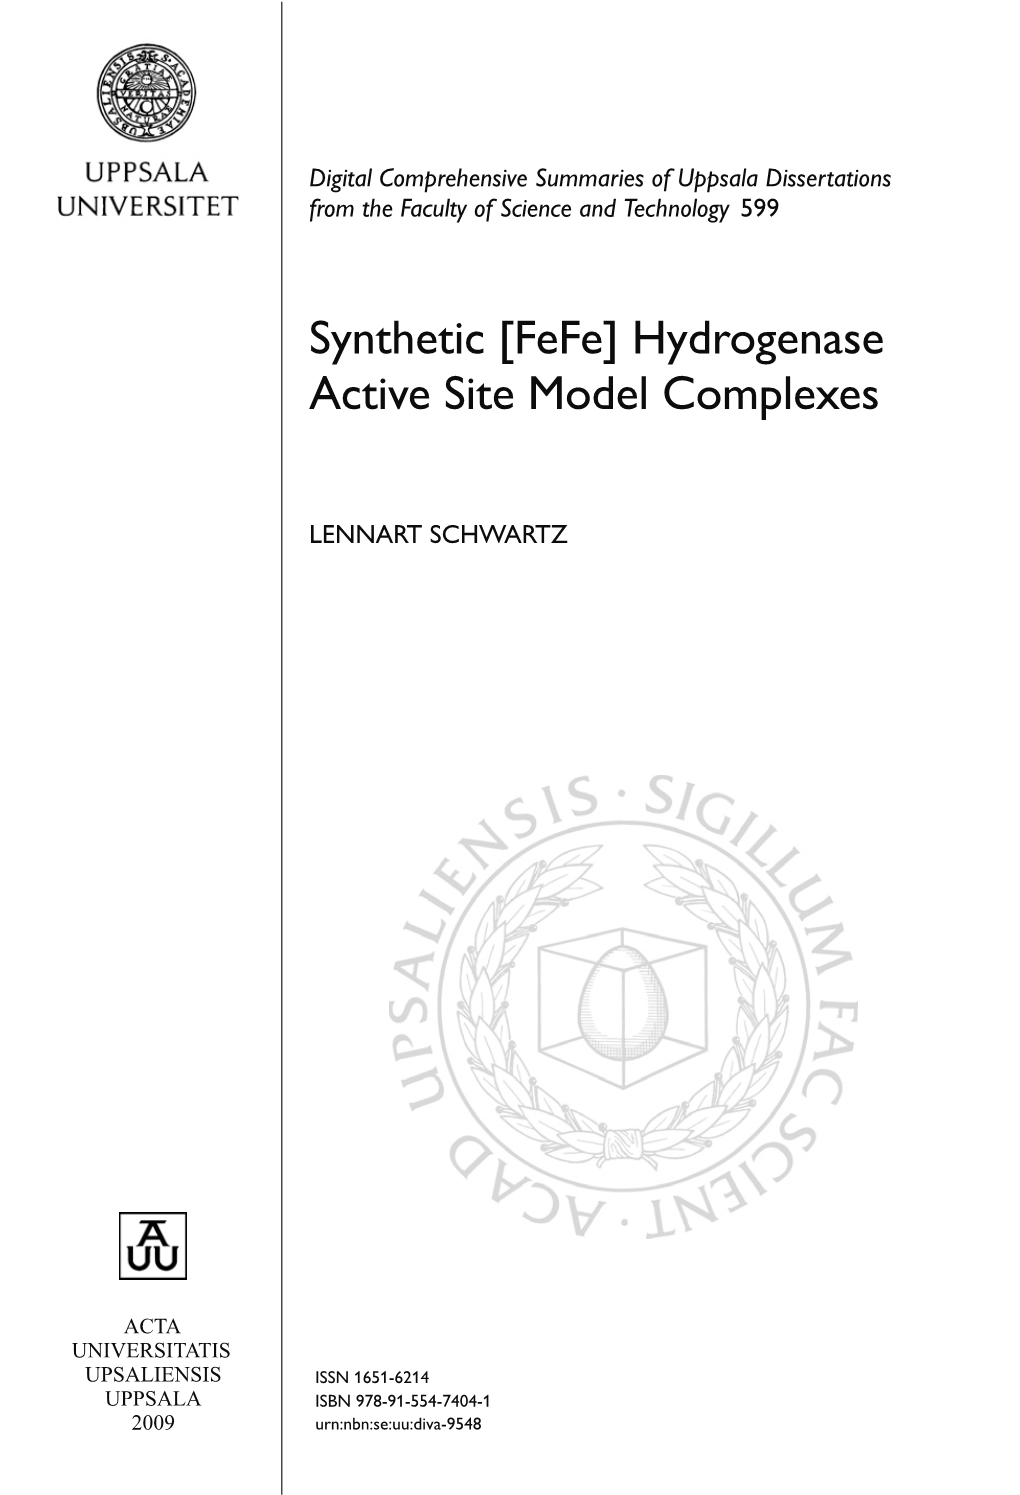 [Fefe] Hydrogenase Active Site Model Complexes